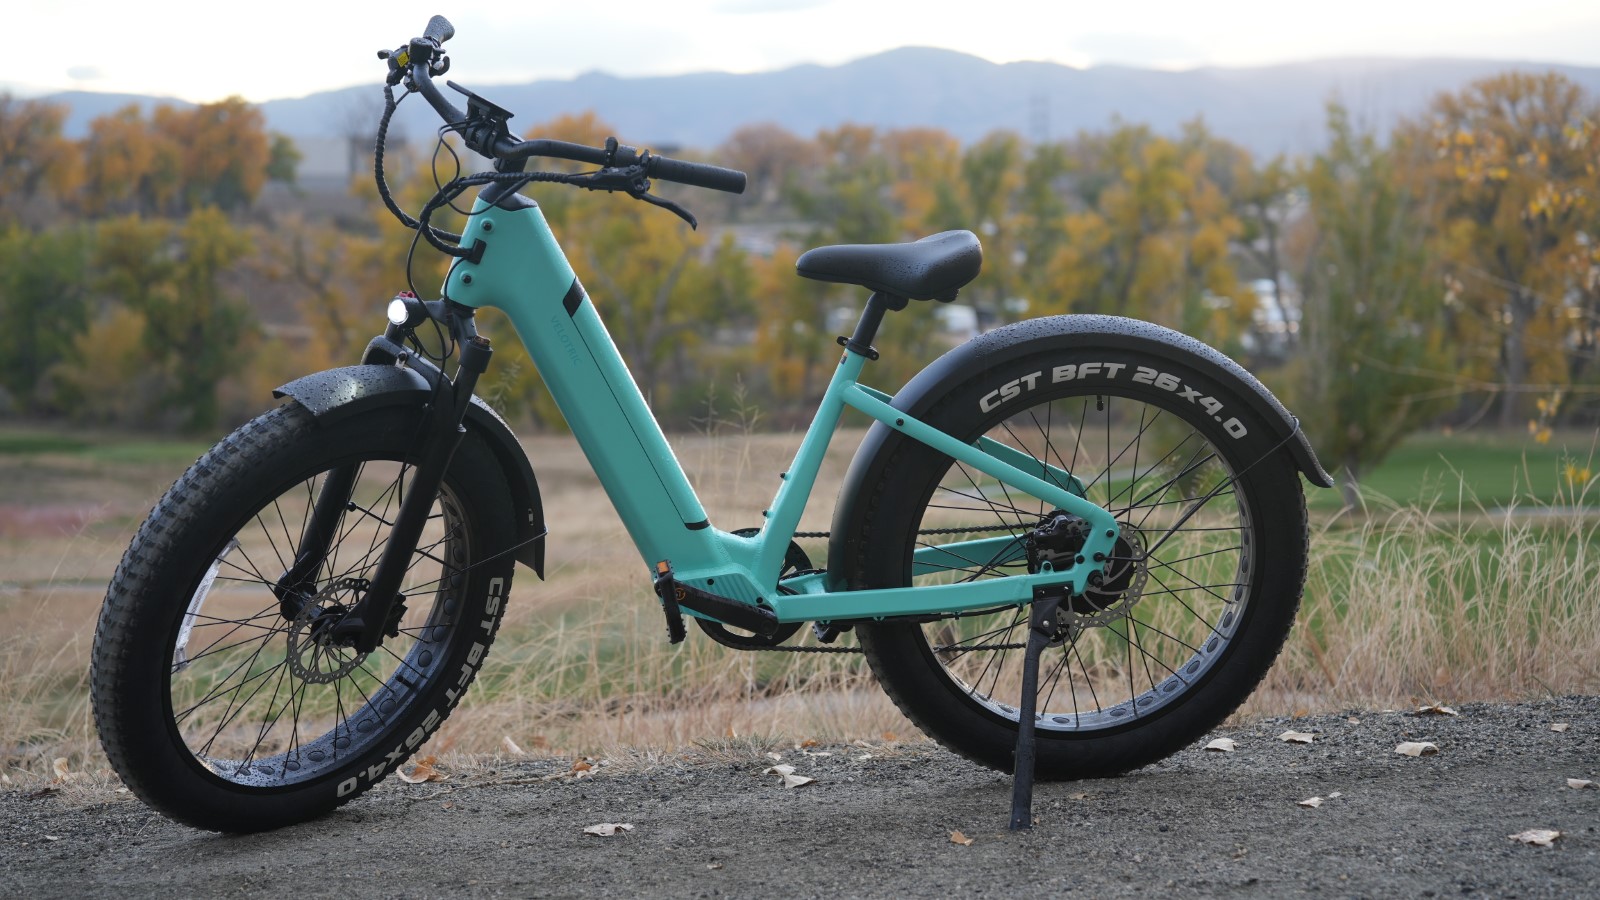 Handelsmerk klei Geheugen Velotric Nomad 1 electric bike review: Tackle any terrain in comfort | ZDNET